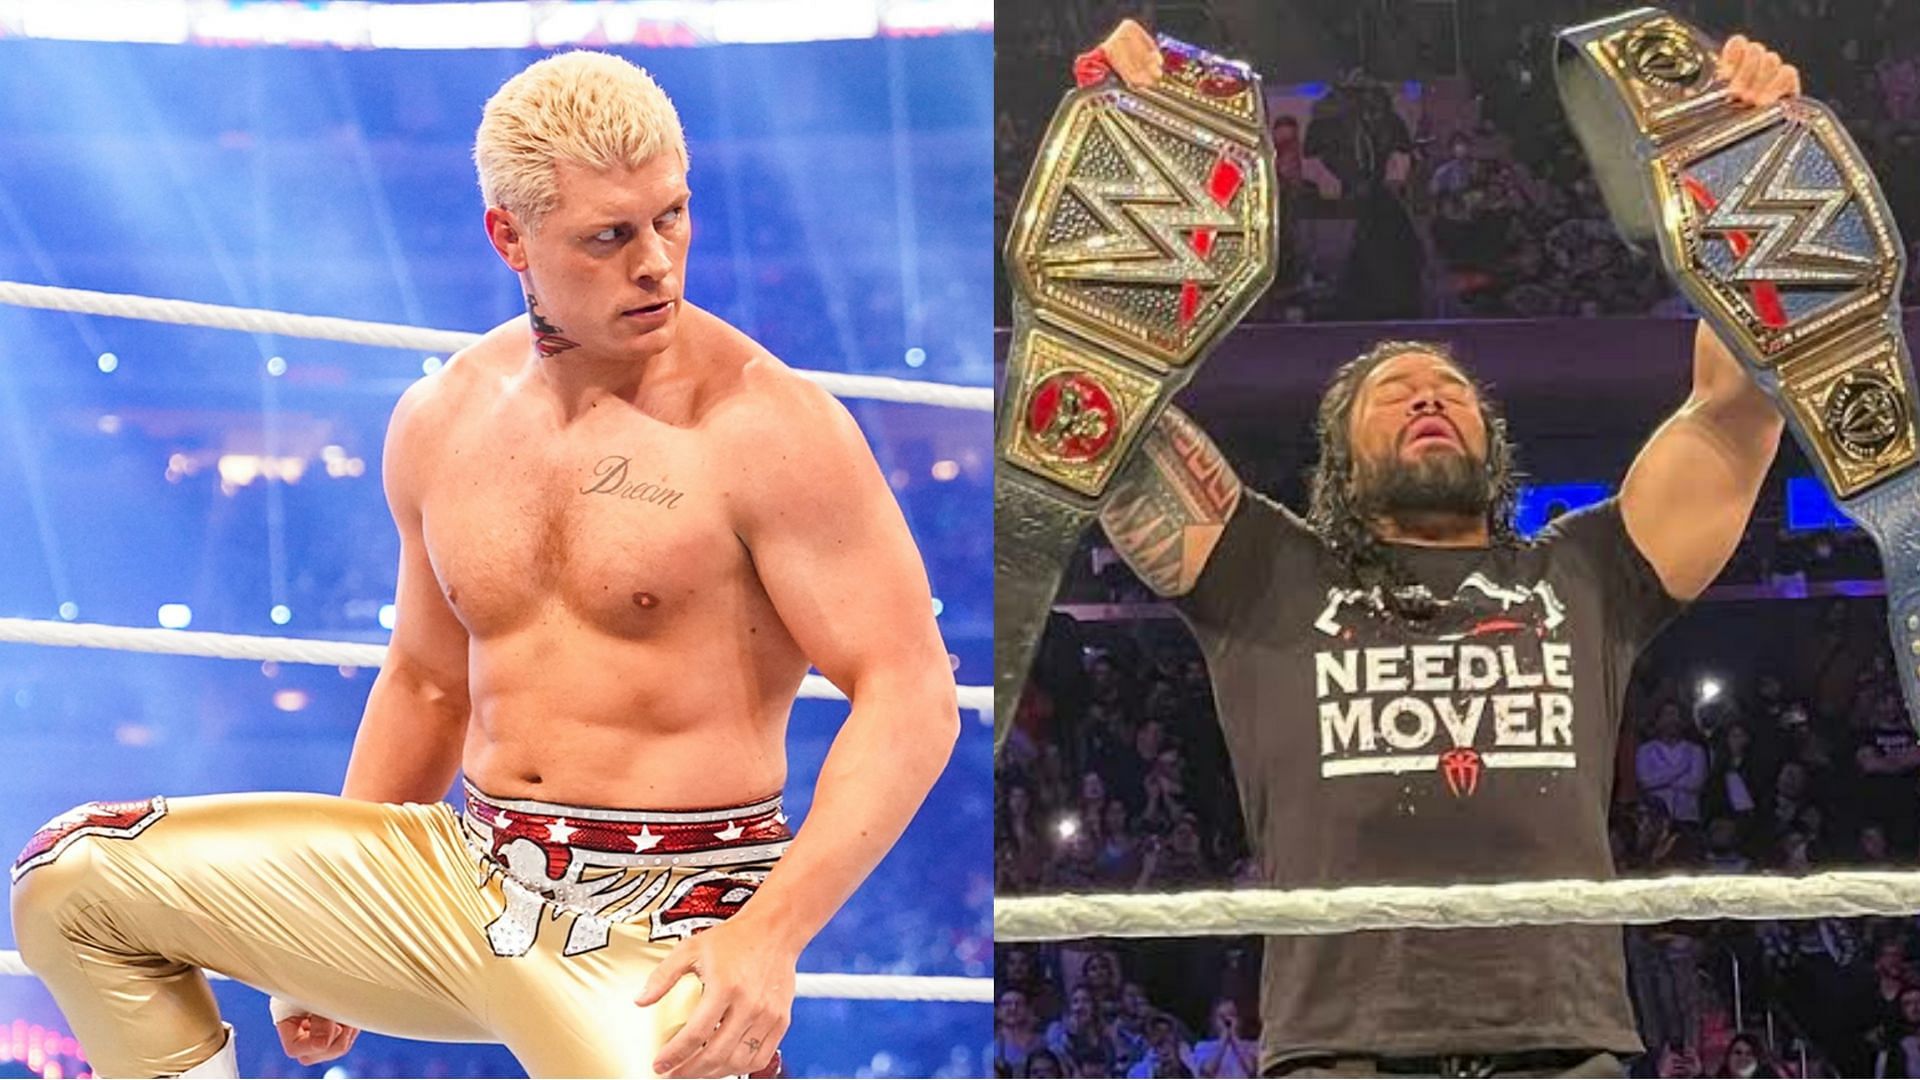 Cody returned to WWE at WrestleMania 38.